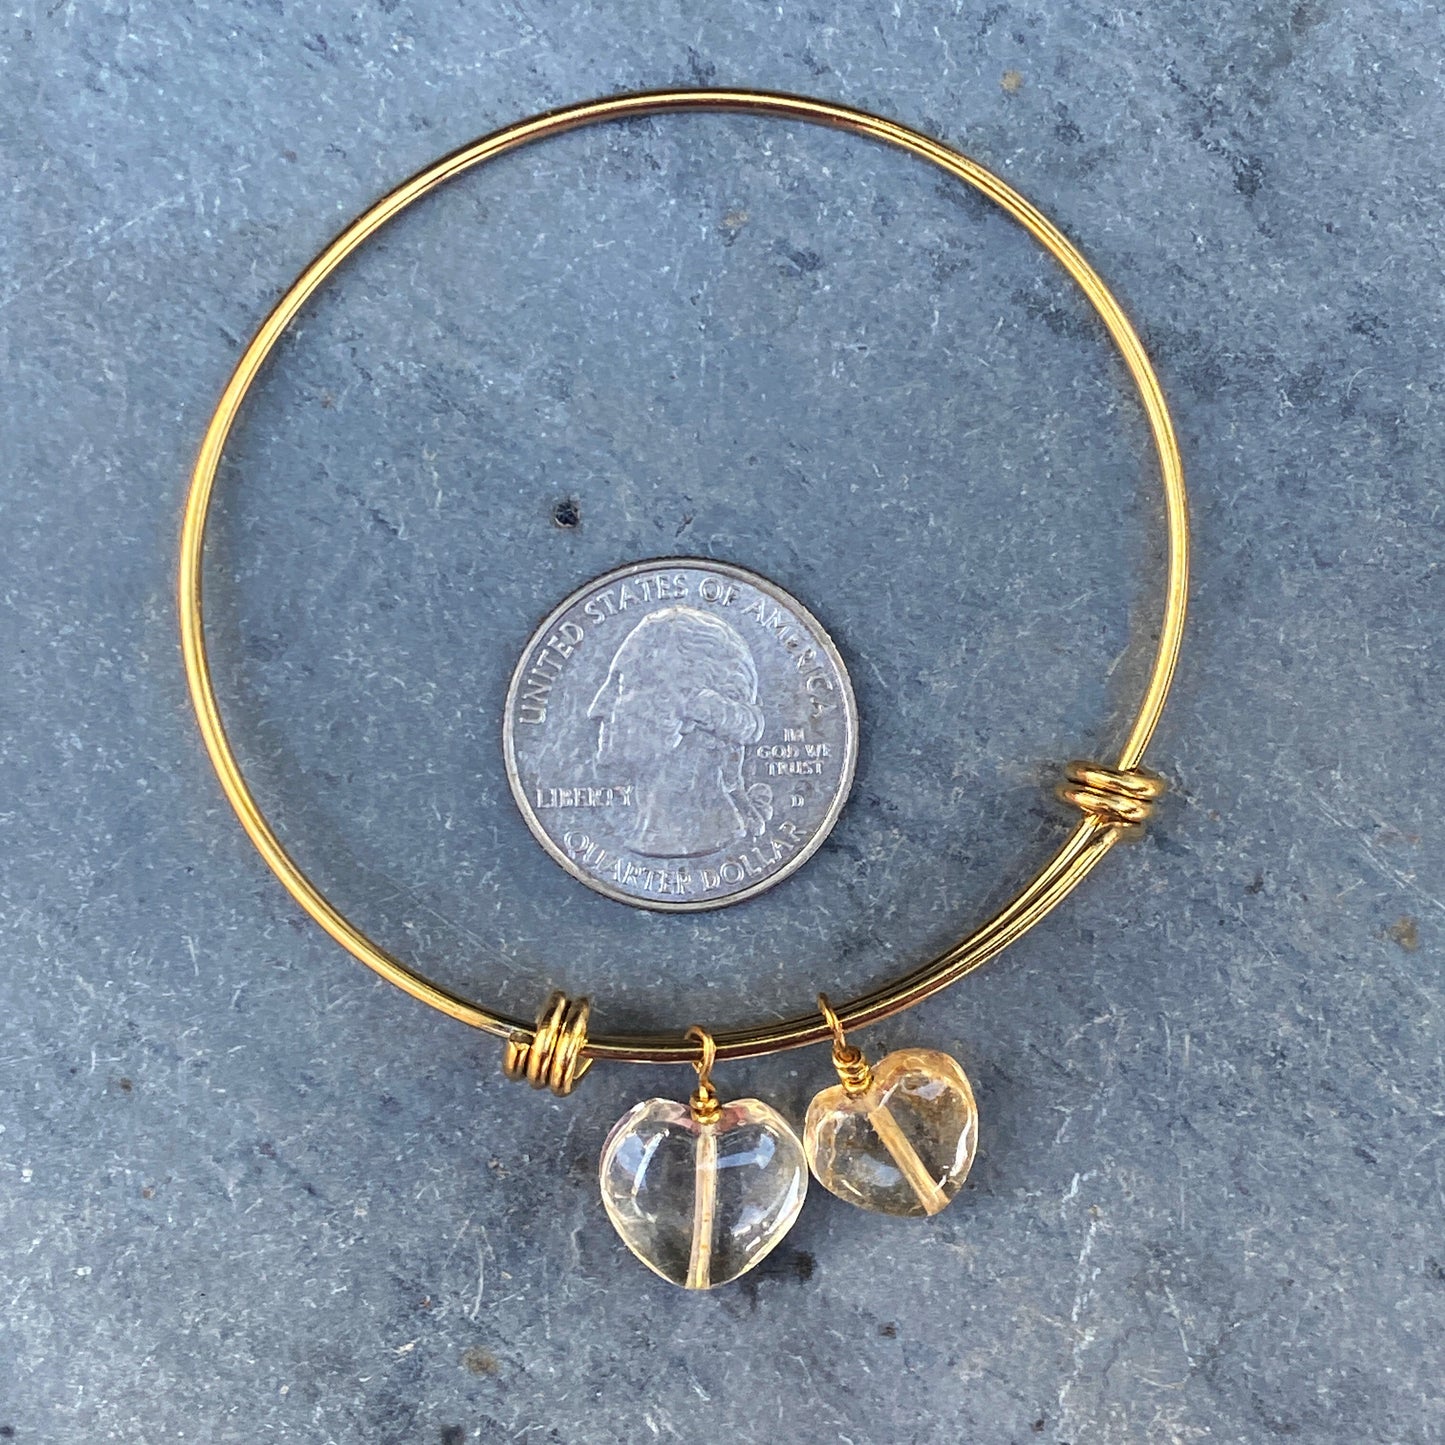 Brass and Citrine gemstone Bangle Cuff Bracelets